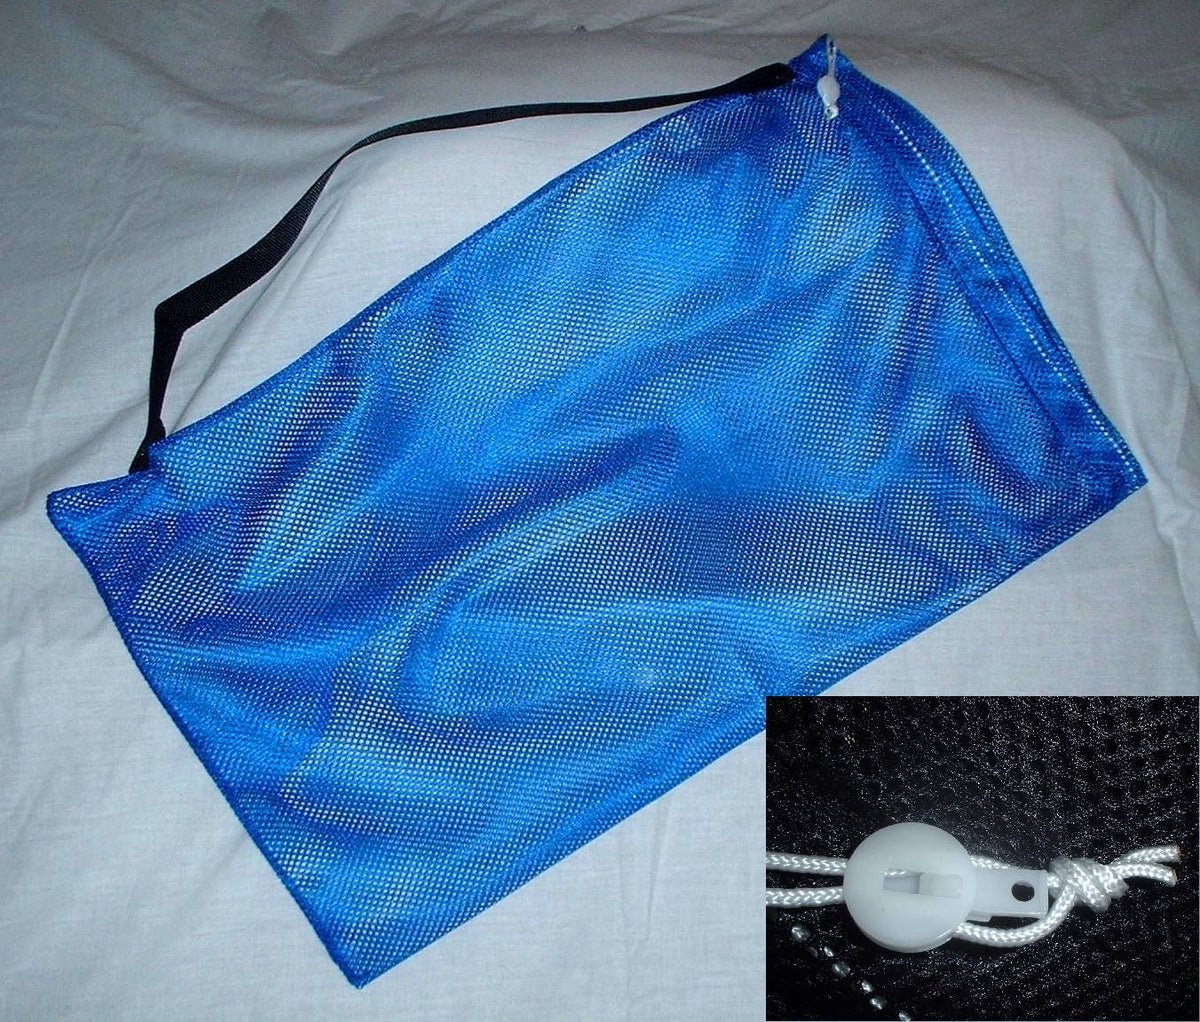 Mesh Drawstring bag 16"x30" with Shoulder Strap